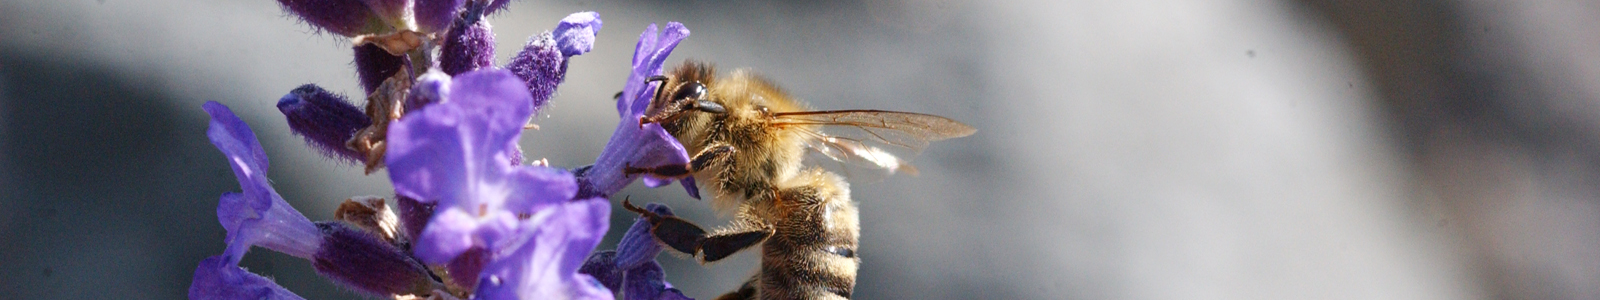 Biene auf lila Blüte ©DLR